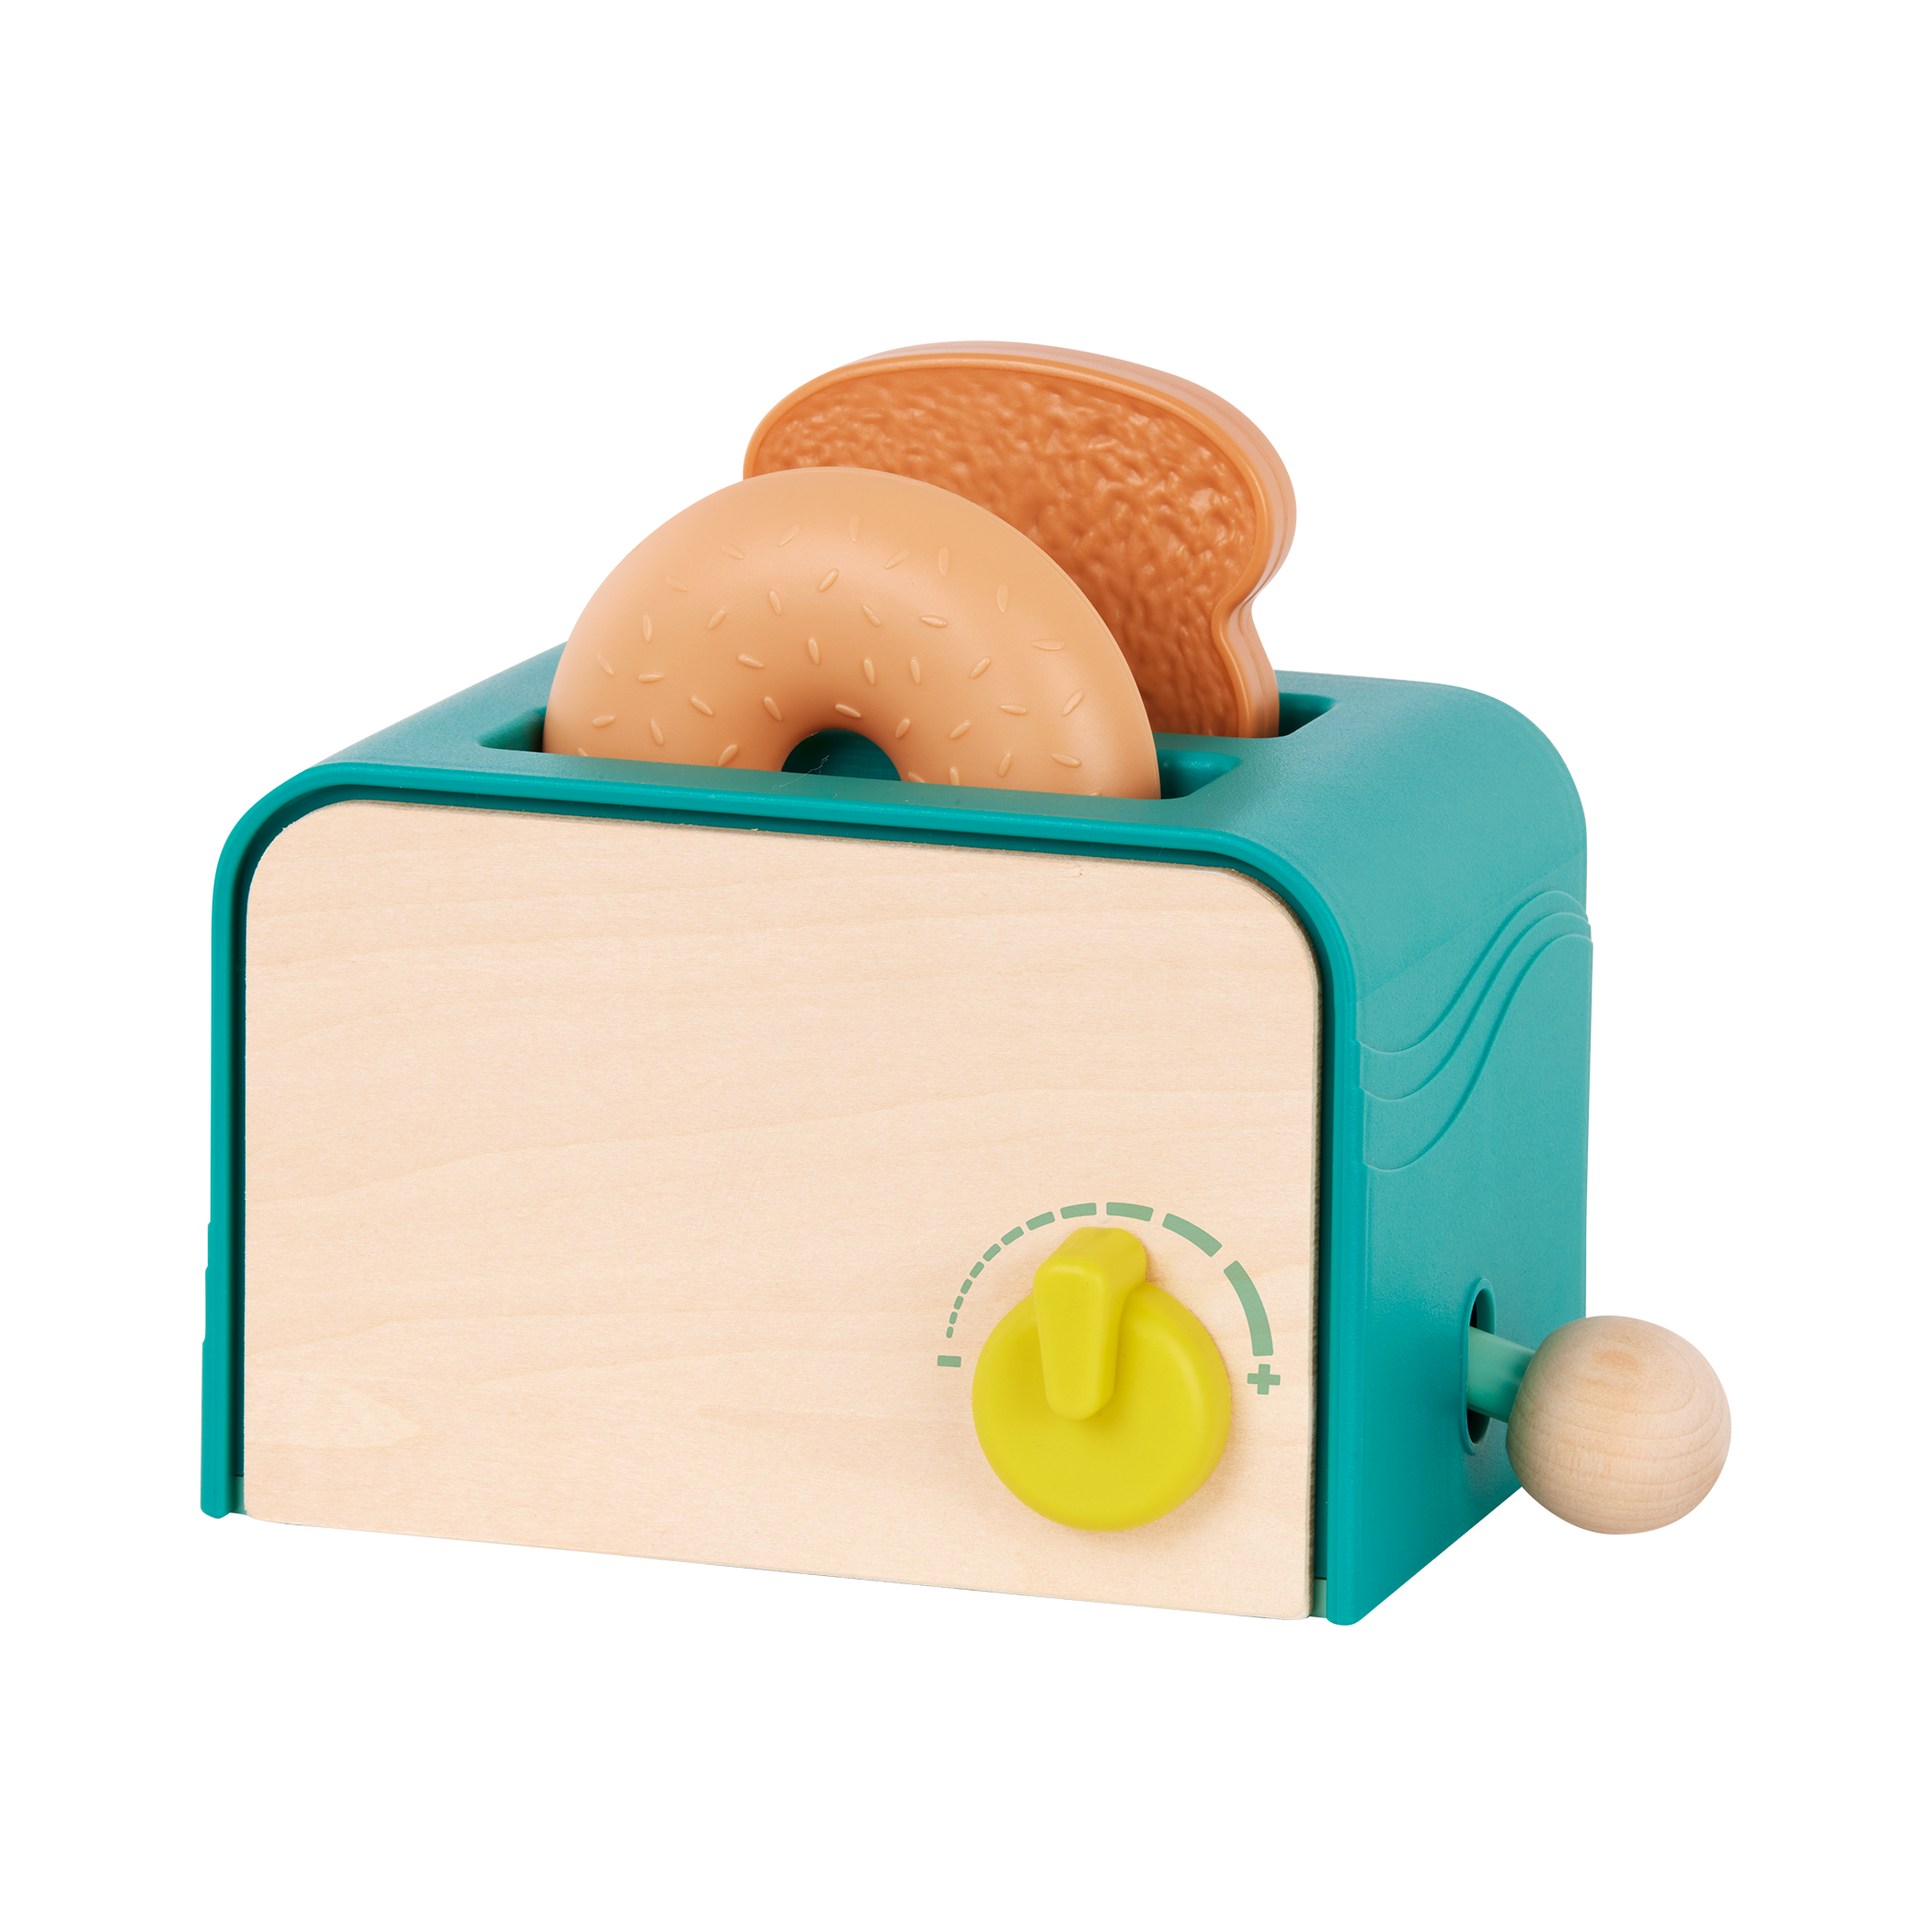 Mini Chef - Breakfast Playset, Toaster Set